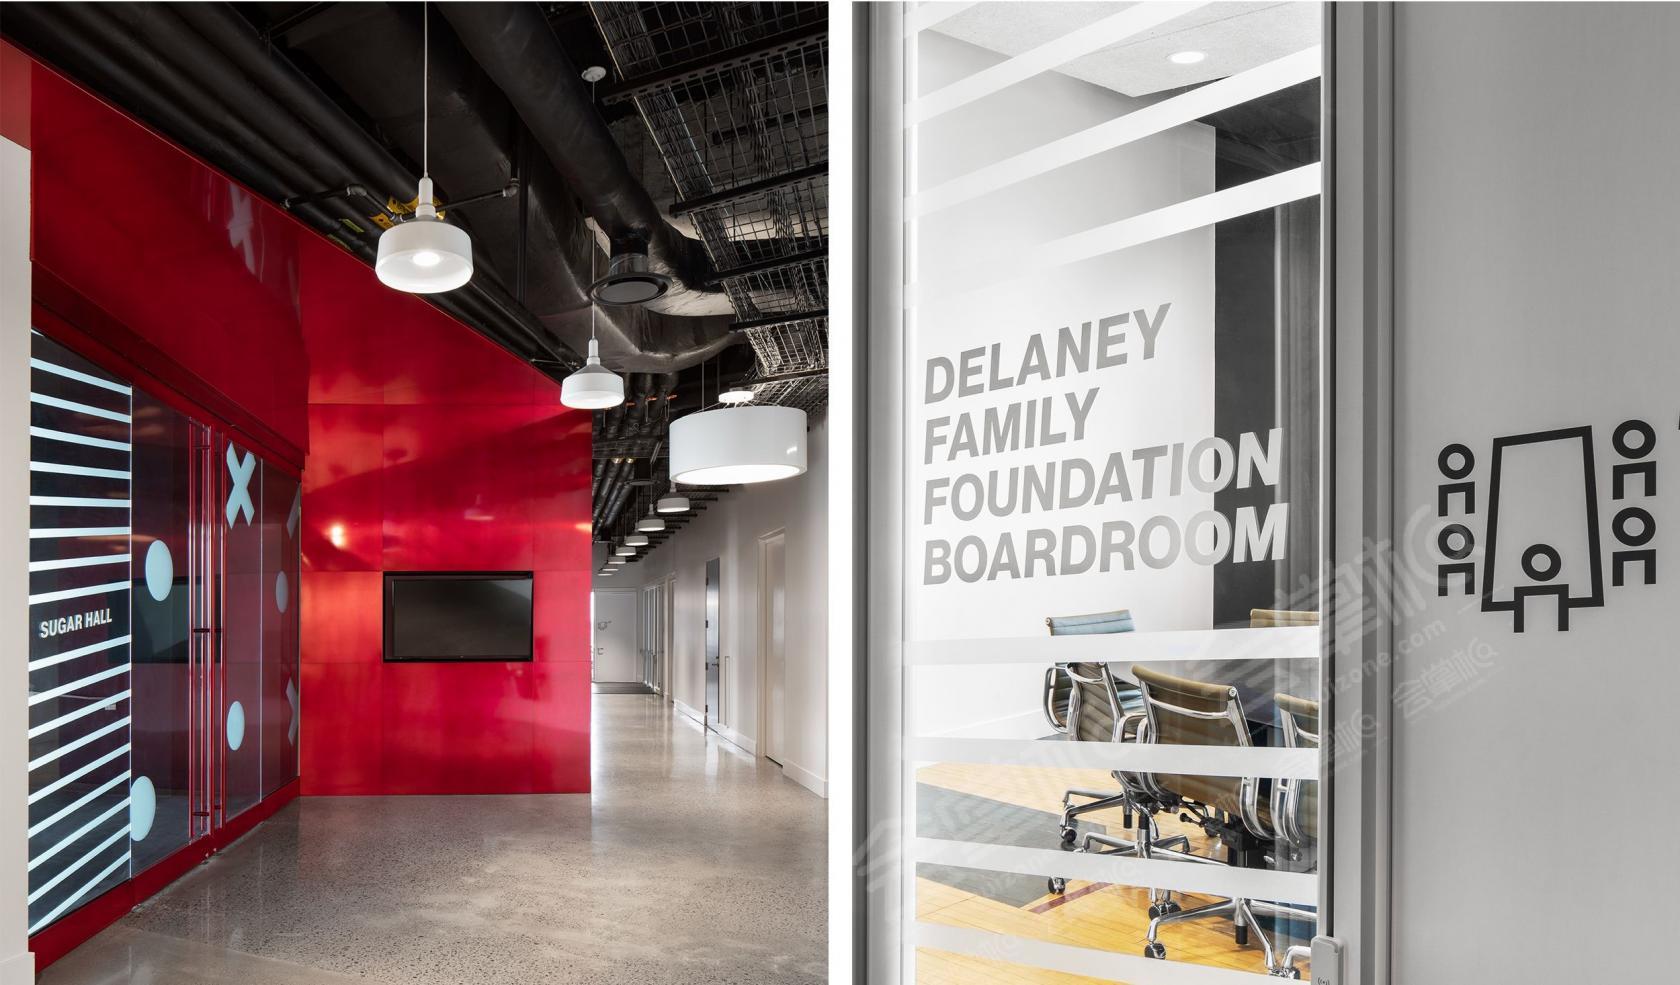 Delaney Family Board Room